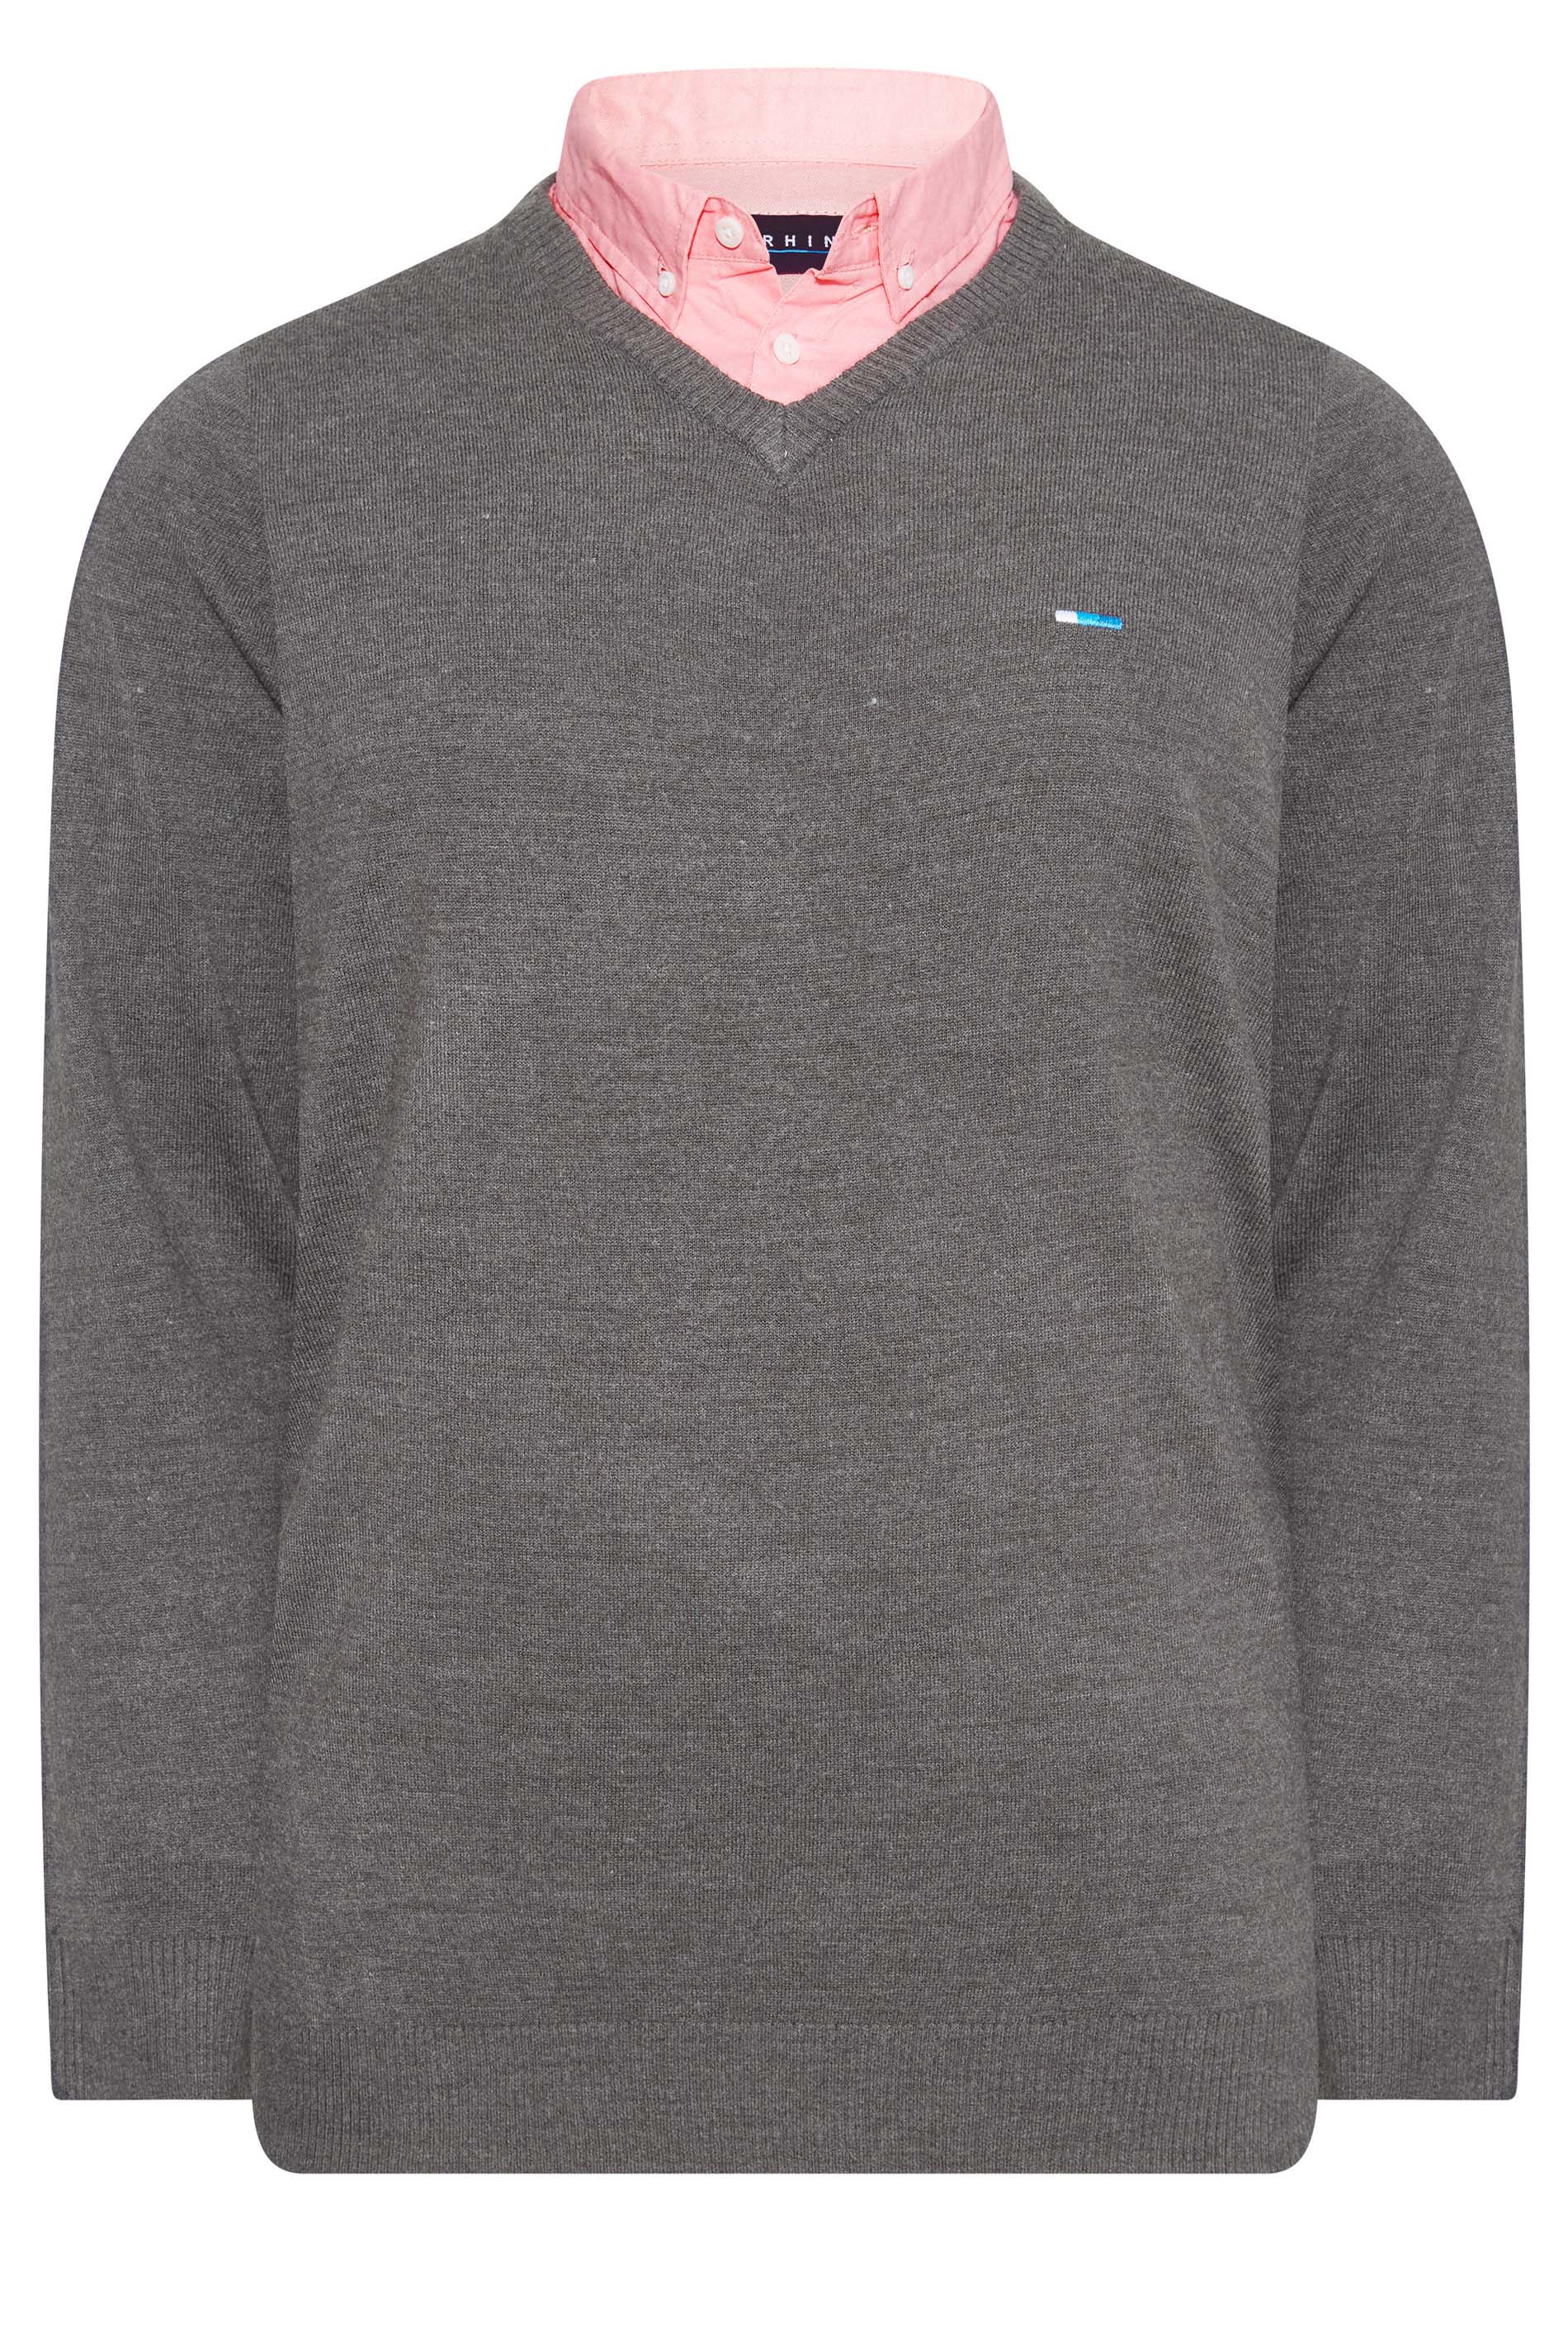 BadRhino Charcoal Grey & Pink Essential Mock Shirt Jumper | BadRhino 3